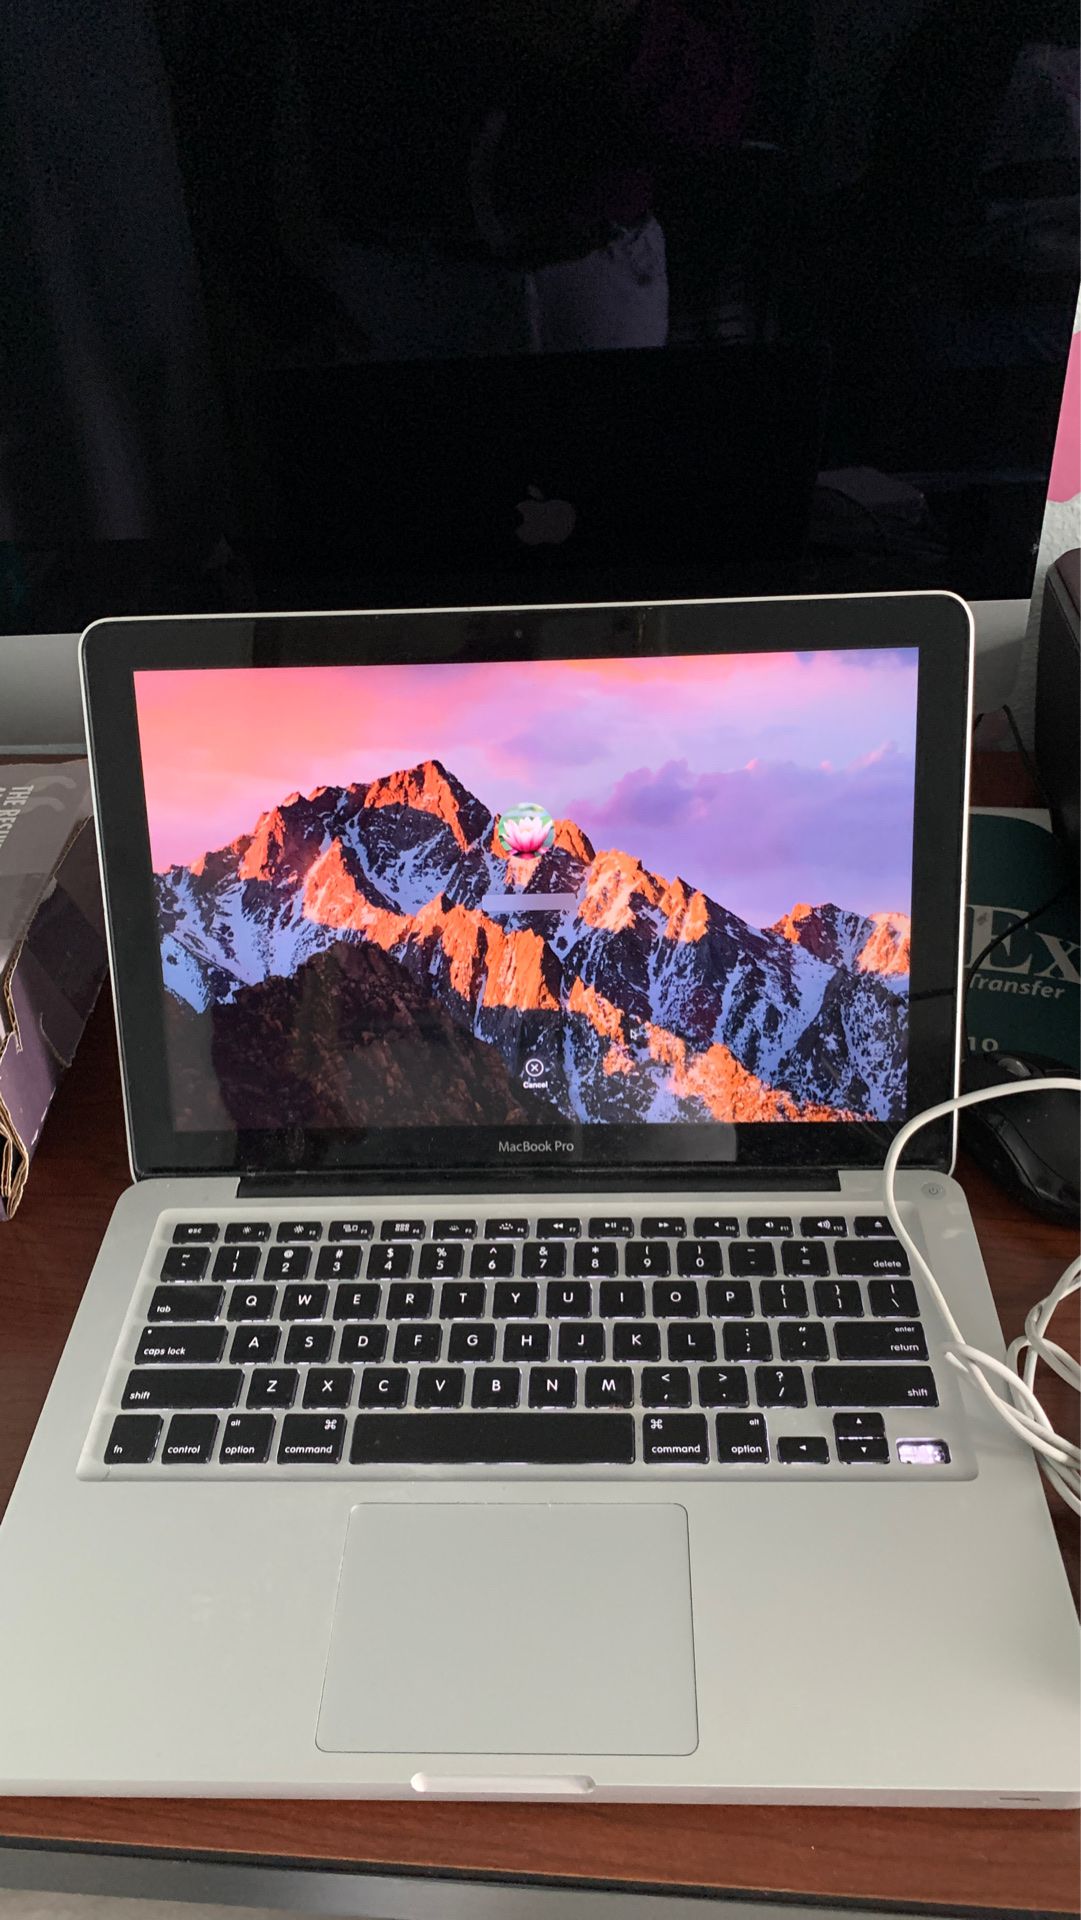 MacBook pro, 14 inch screen